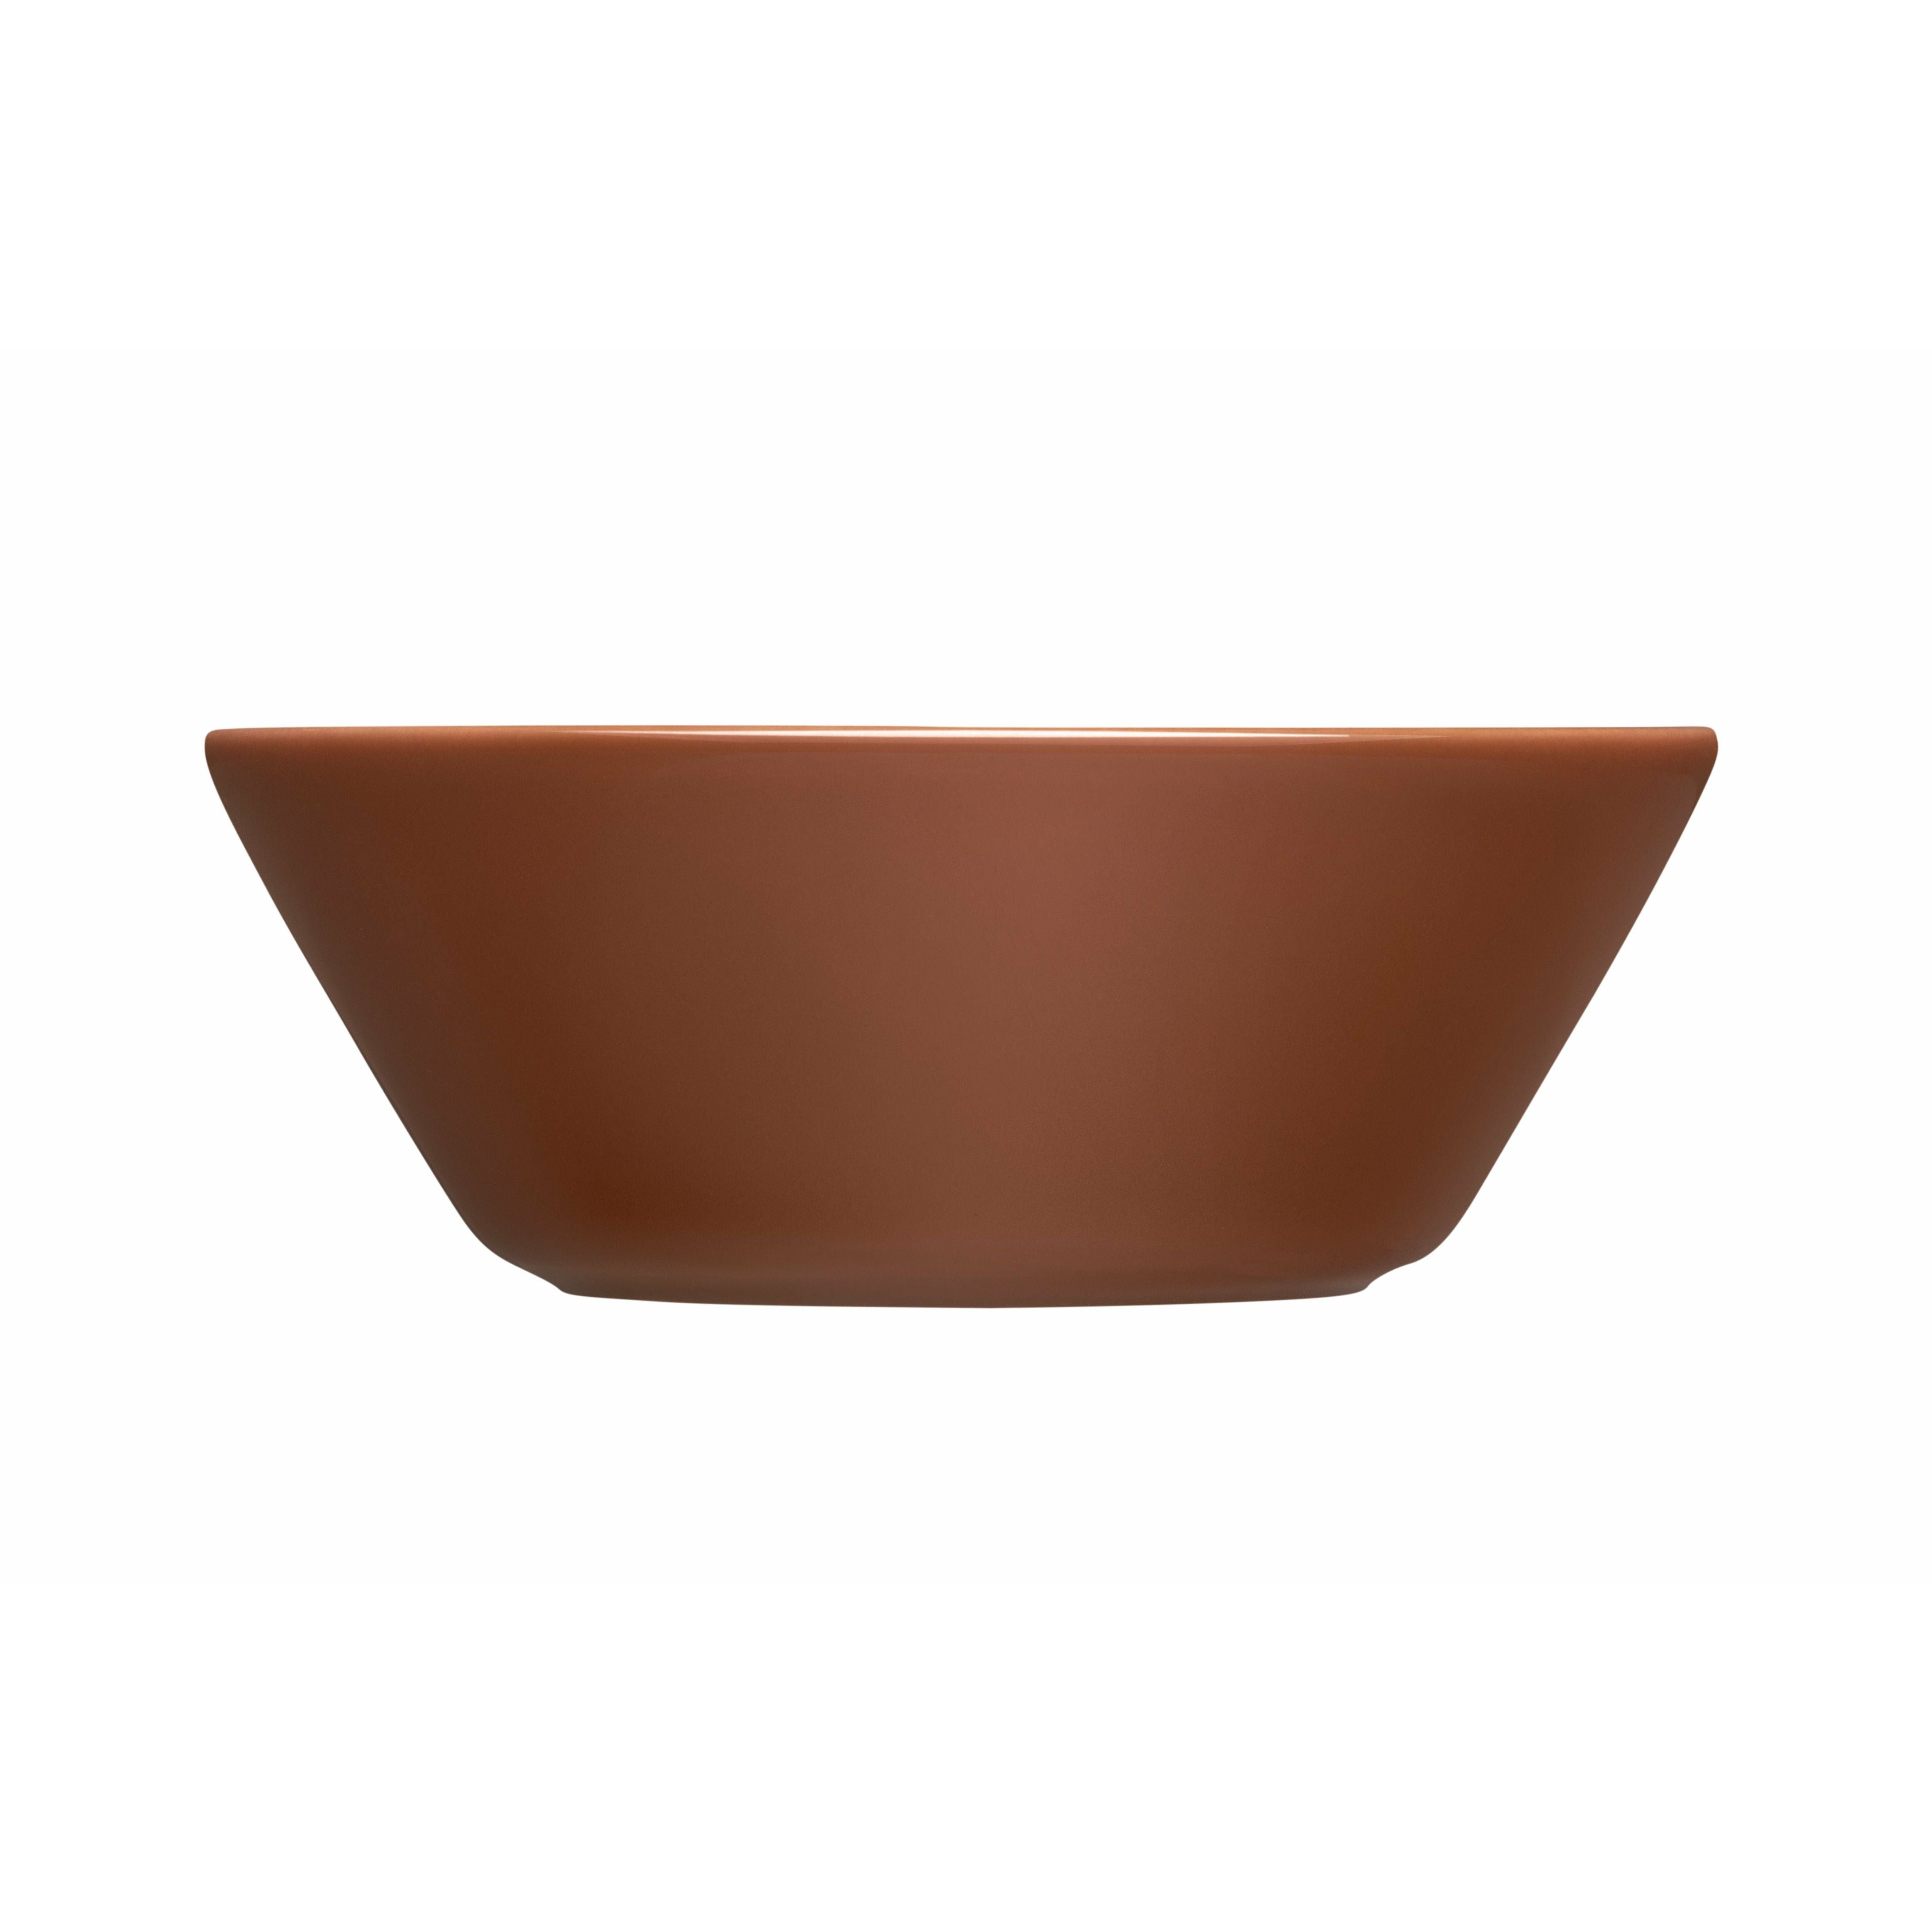 Iittala teema bowl 15 cm, marrón vintage